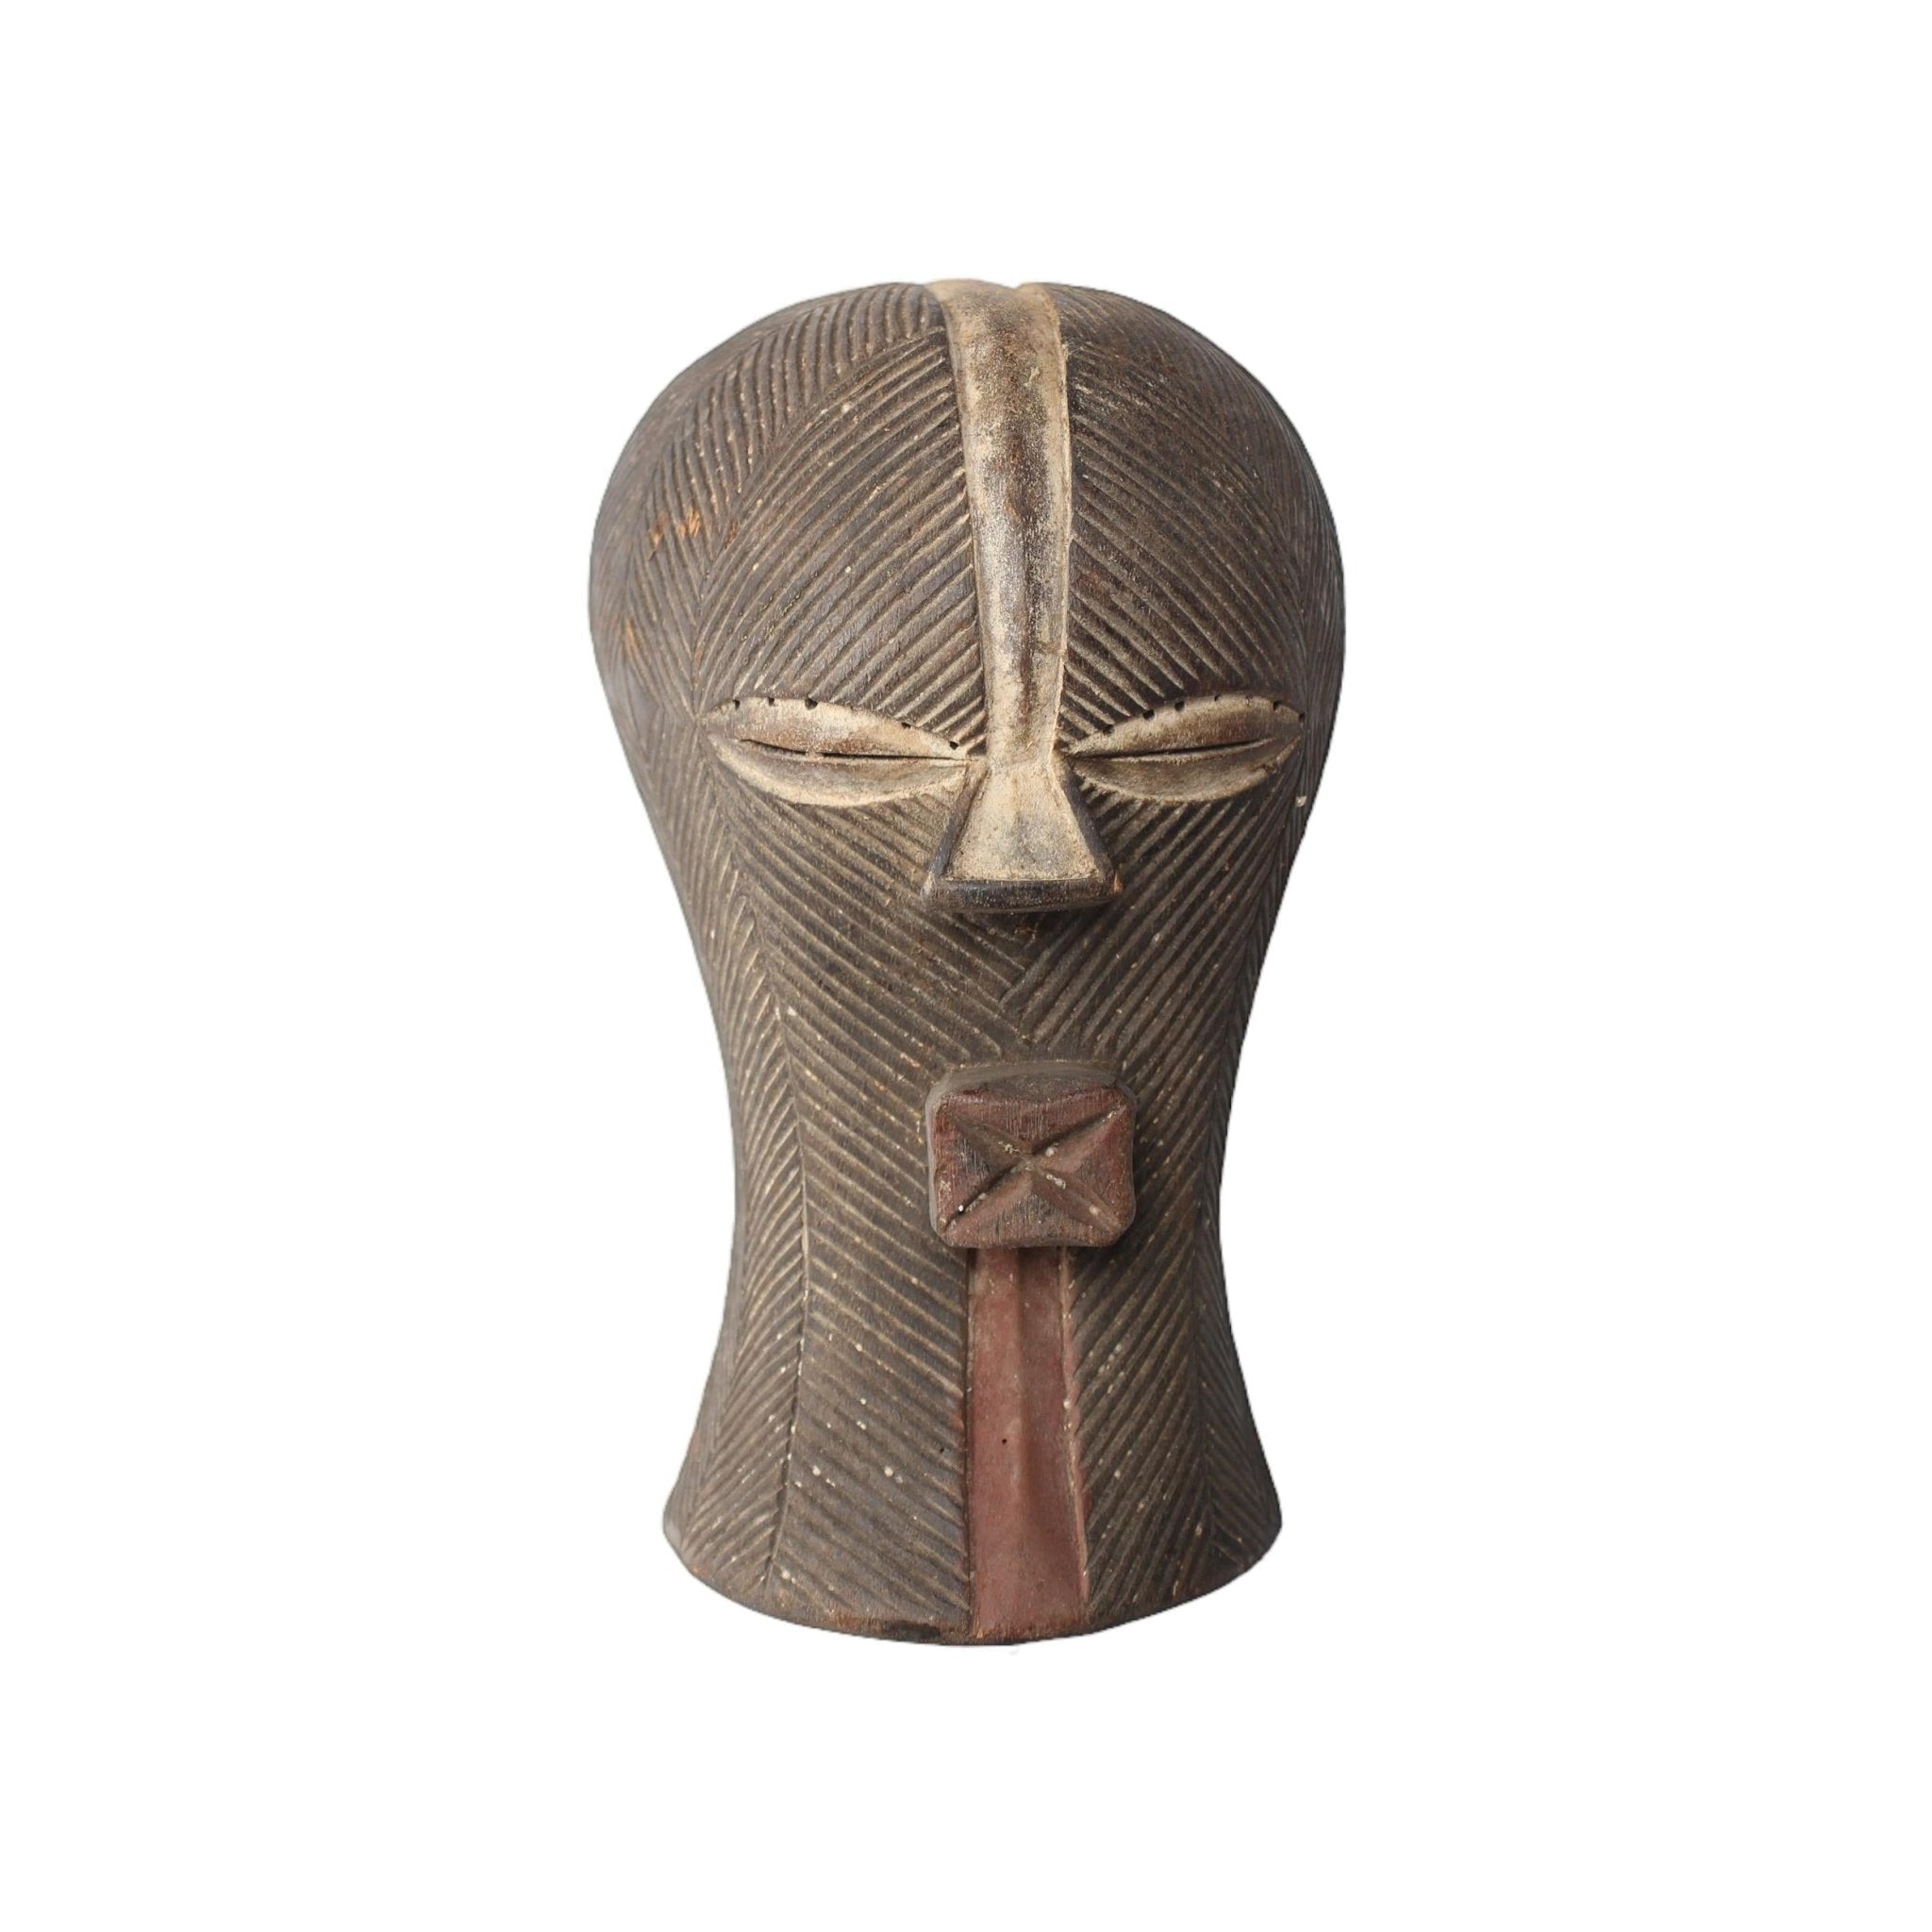 Basonge/Songye Tribe Mask ~13.0" Tall - African Angel Art - Mask